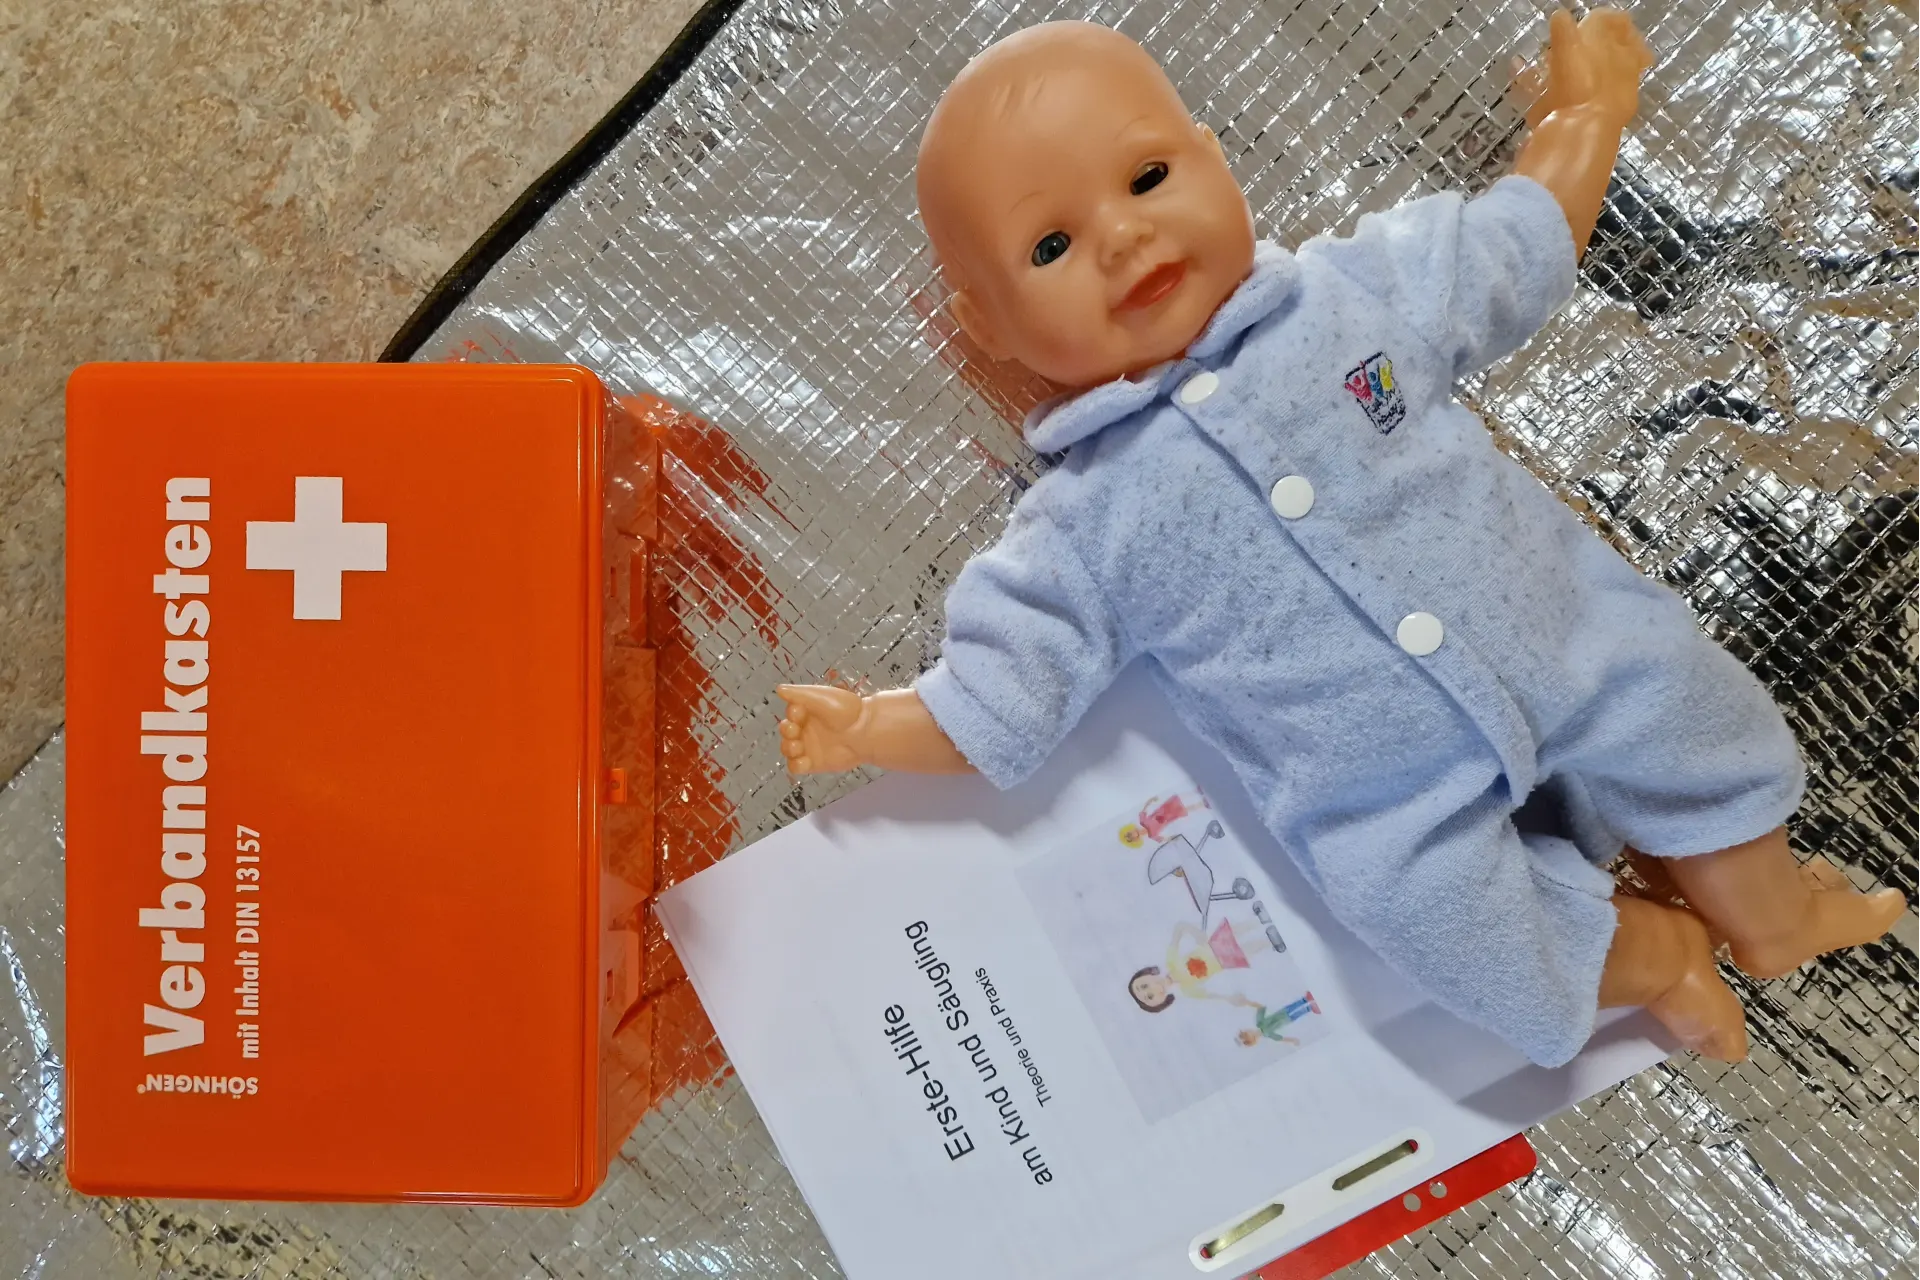 Kinderhaus-Penzberg_Kinderhilfe-Oberland_Erste-Hilfe-für-Kinder